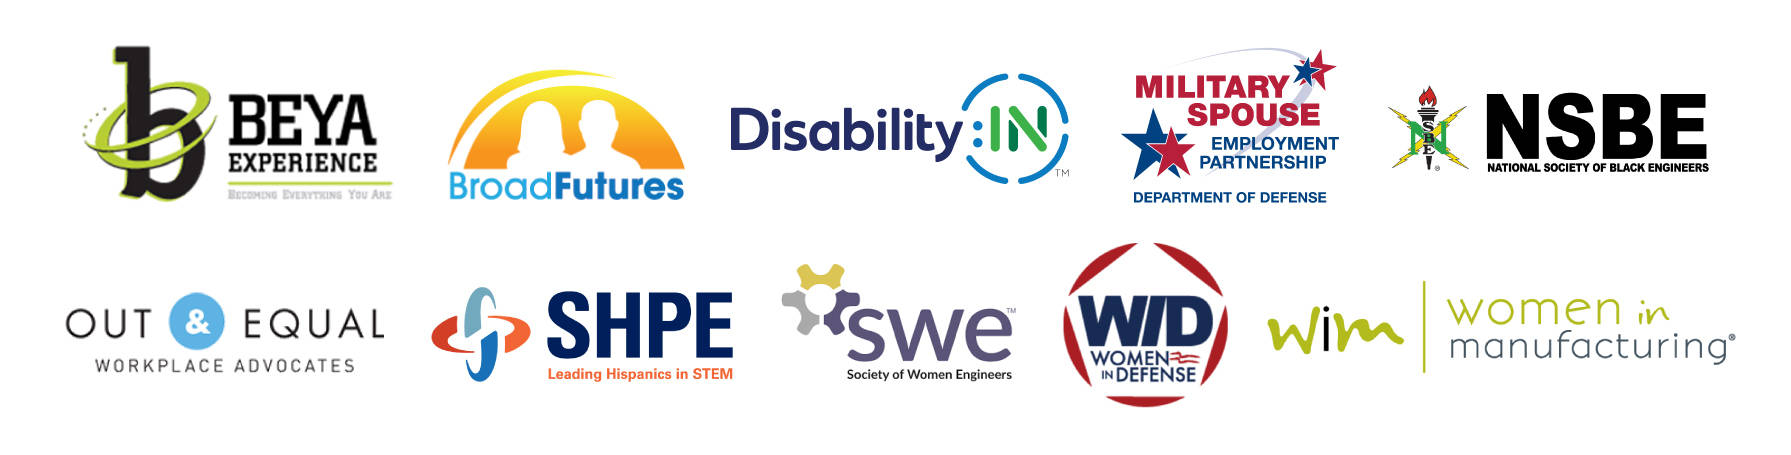 GDMS Partnership Logos Combined